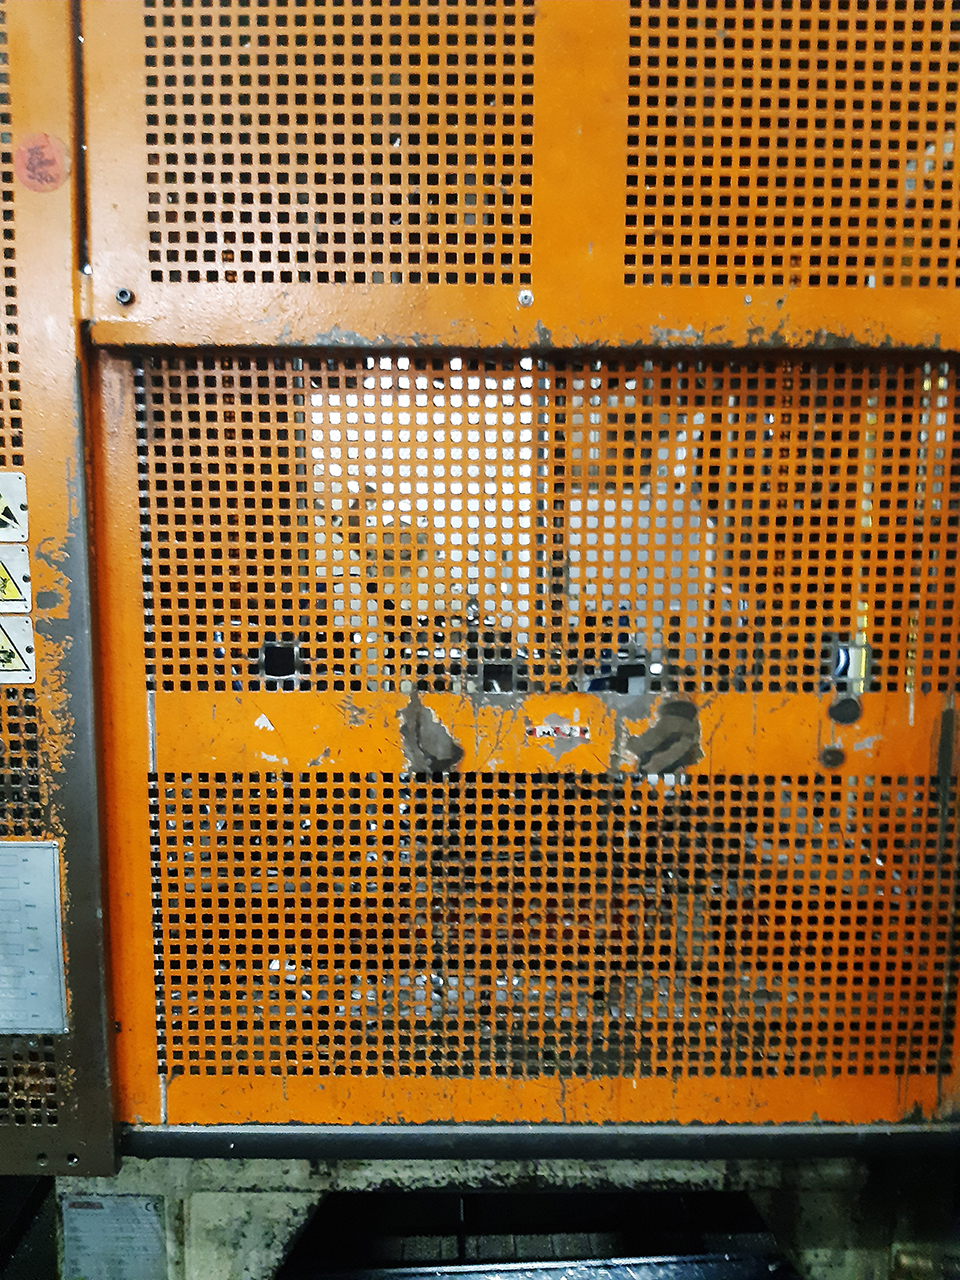 Macchina di pressofusione a camera fredda Buhler H 630 B KK1627, usata